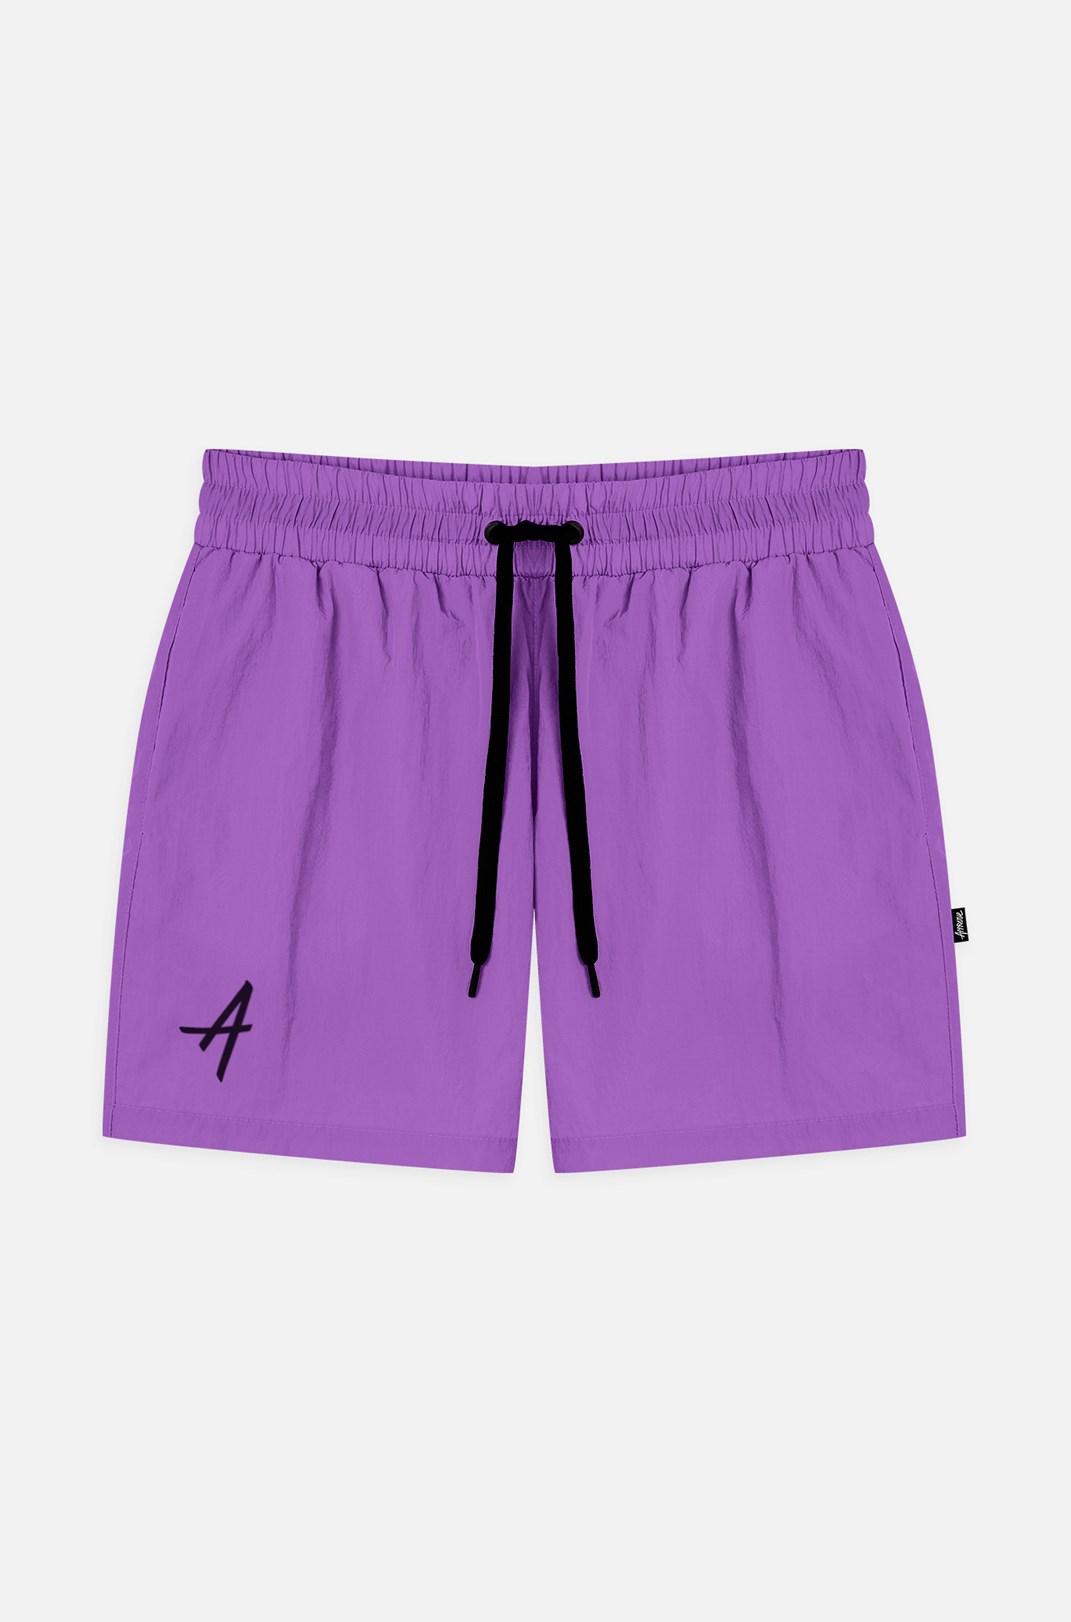 Shorts Approve Basic Violeta